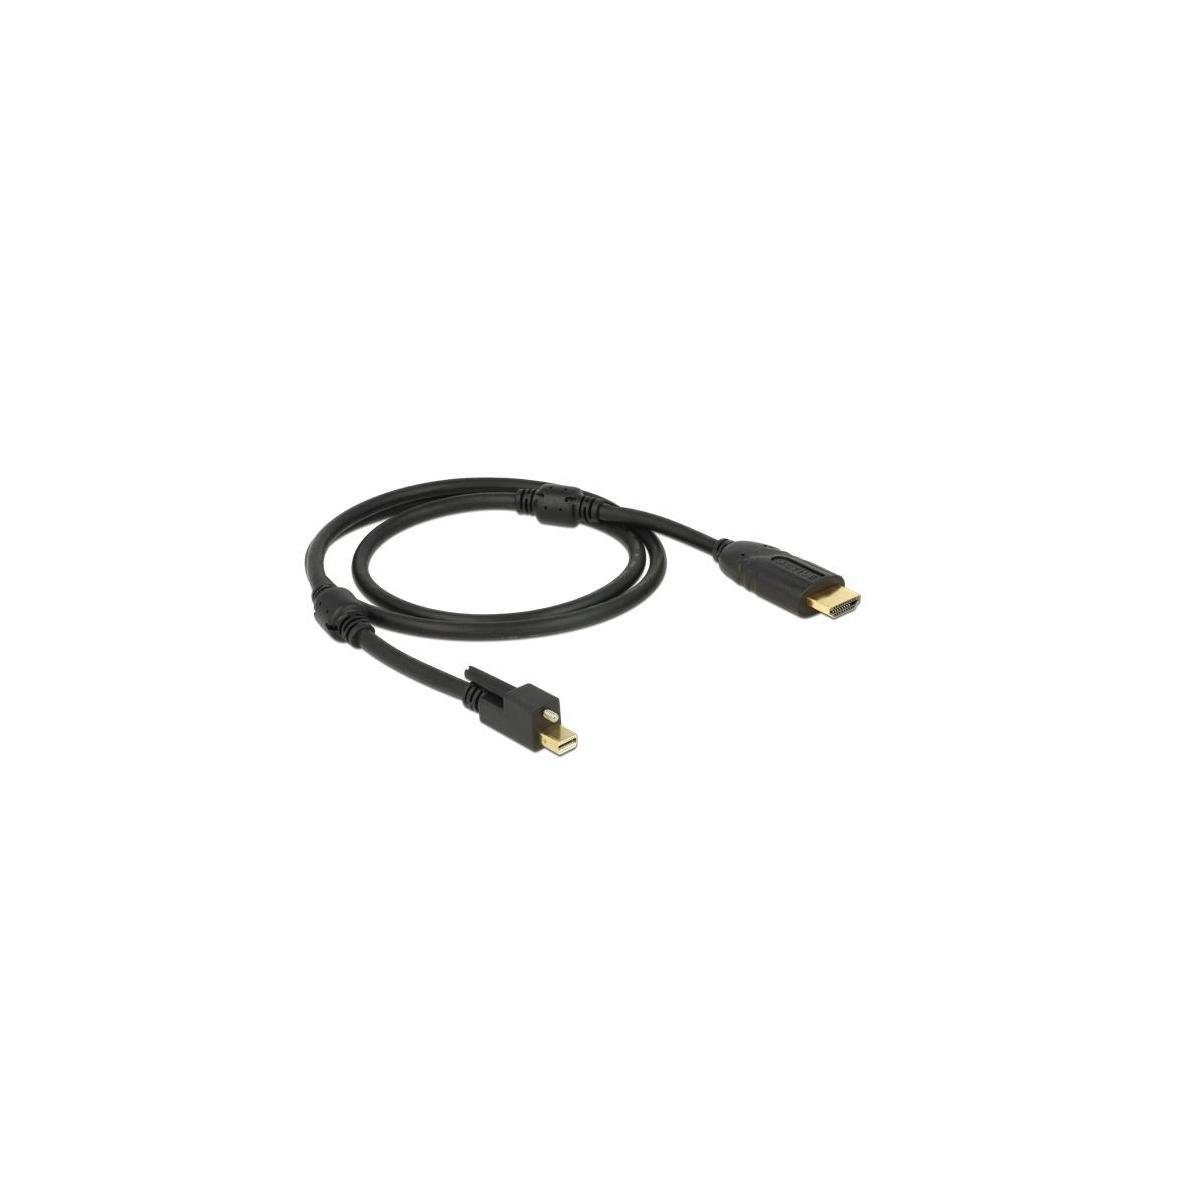 Delock 83730 - Kabel mini DisplayPort 1.2 Stecker mit Schraube... Computer-Kabel, Display Port Mini, HDMI (200,00 cm)